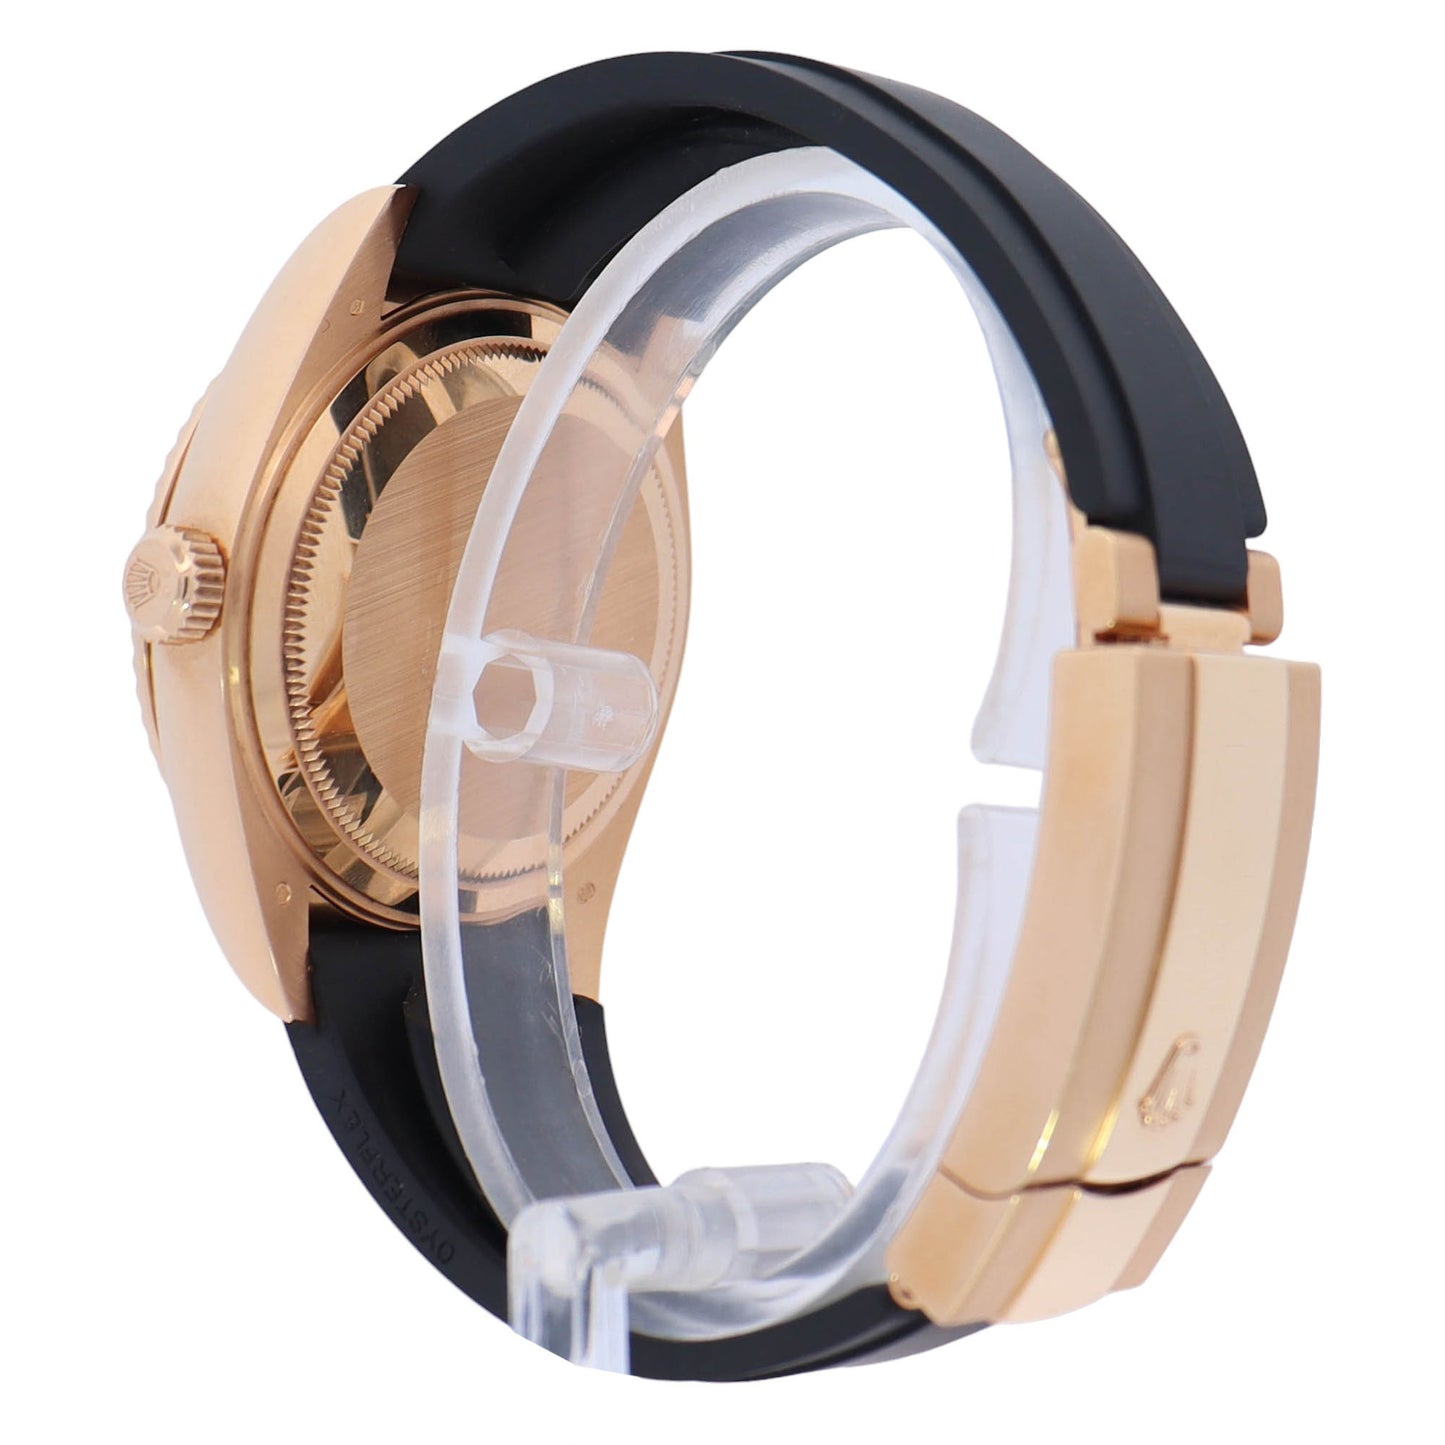 Rolex Sky-Dweller 42mm Yellow Gold Black Stick Dial Watch Reference# 326238 - Happy Jewelers Fine Jewelry Lifetime Warranty